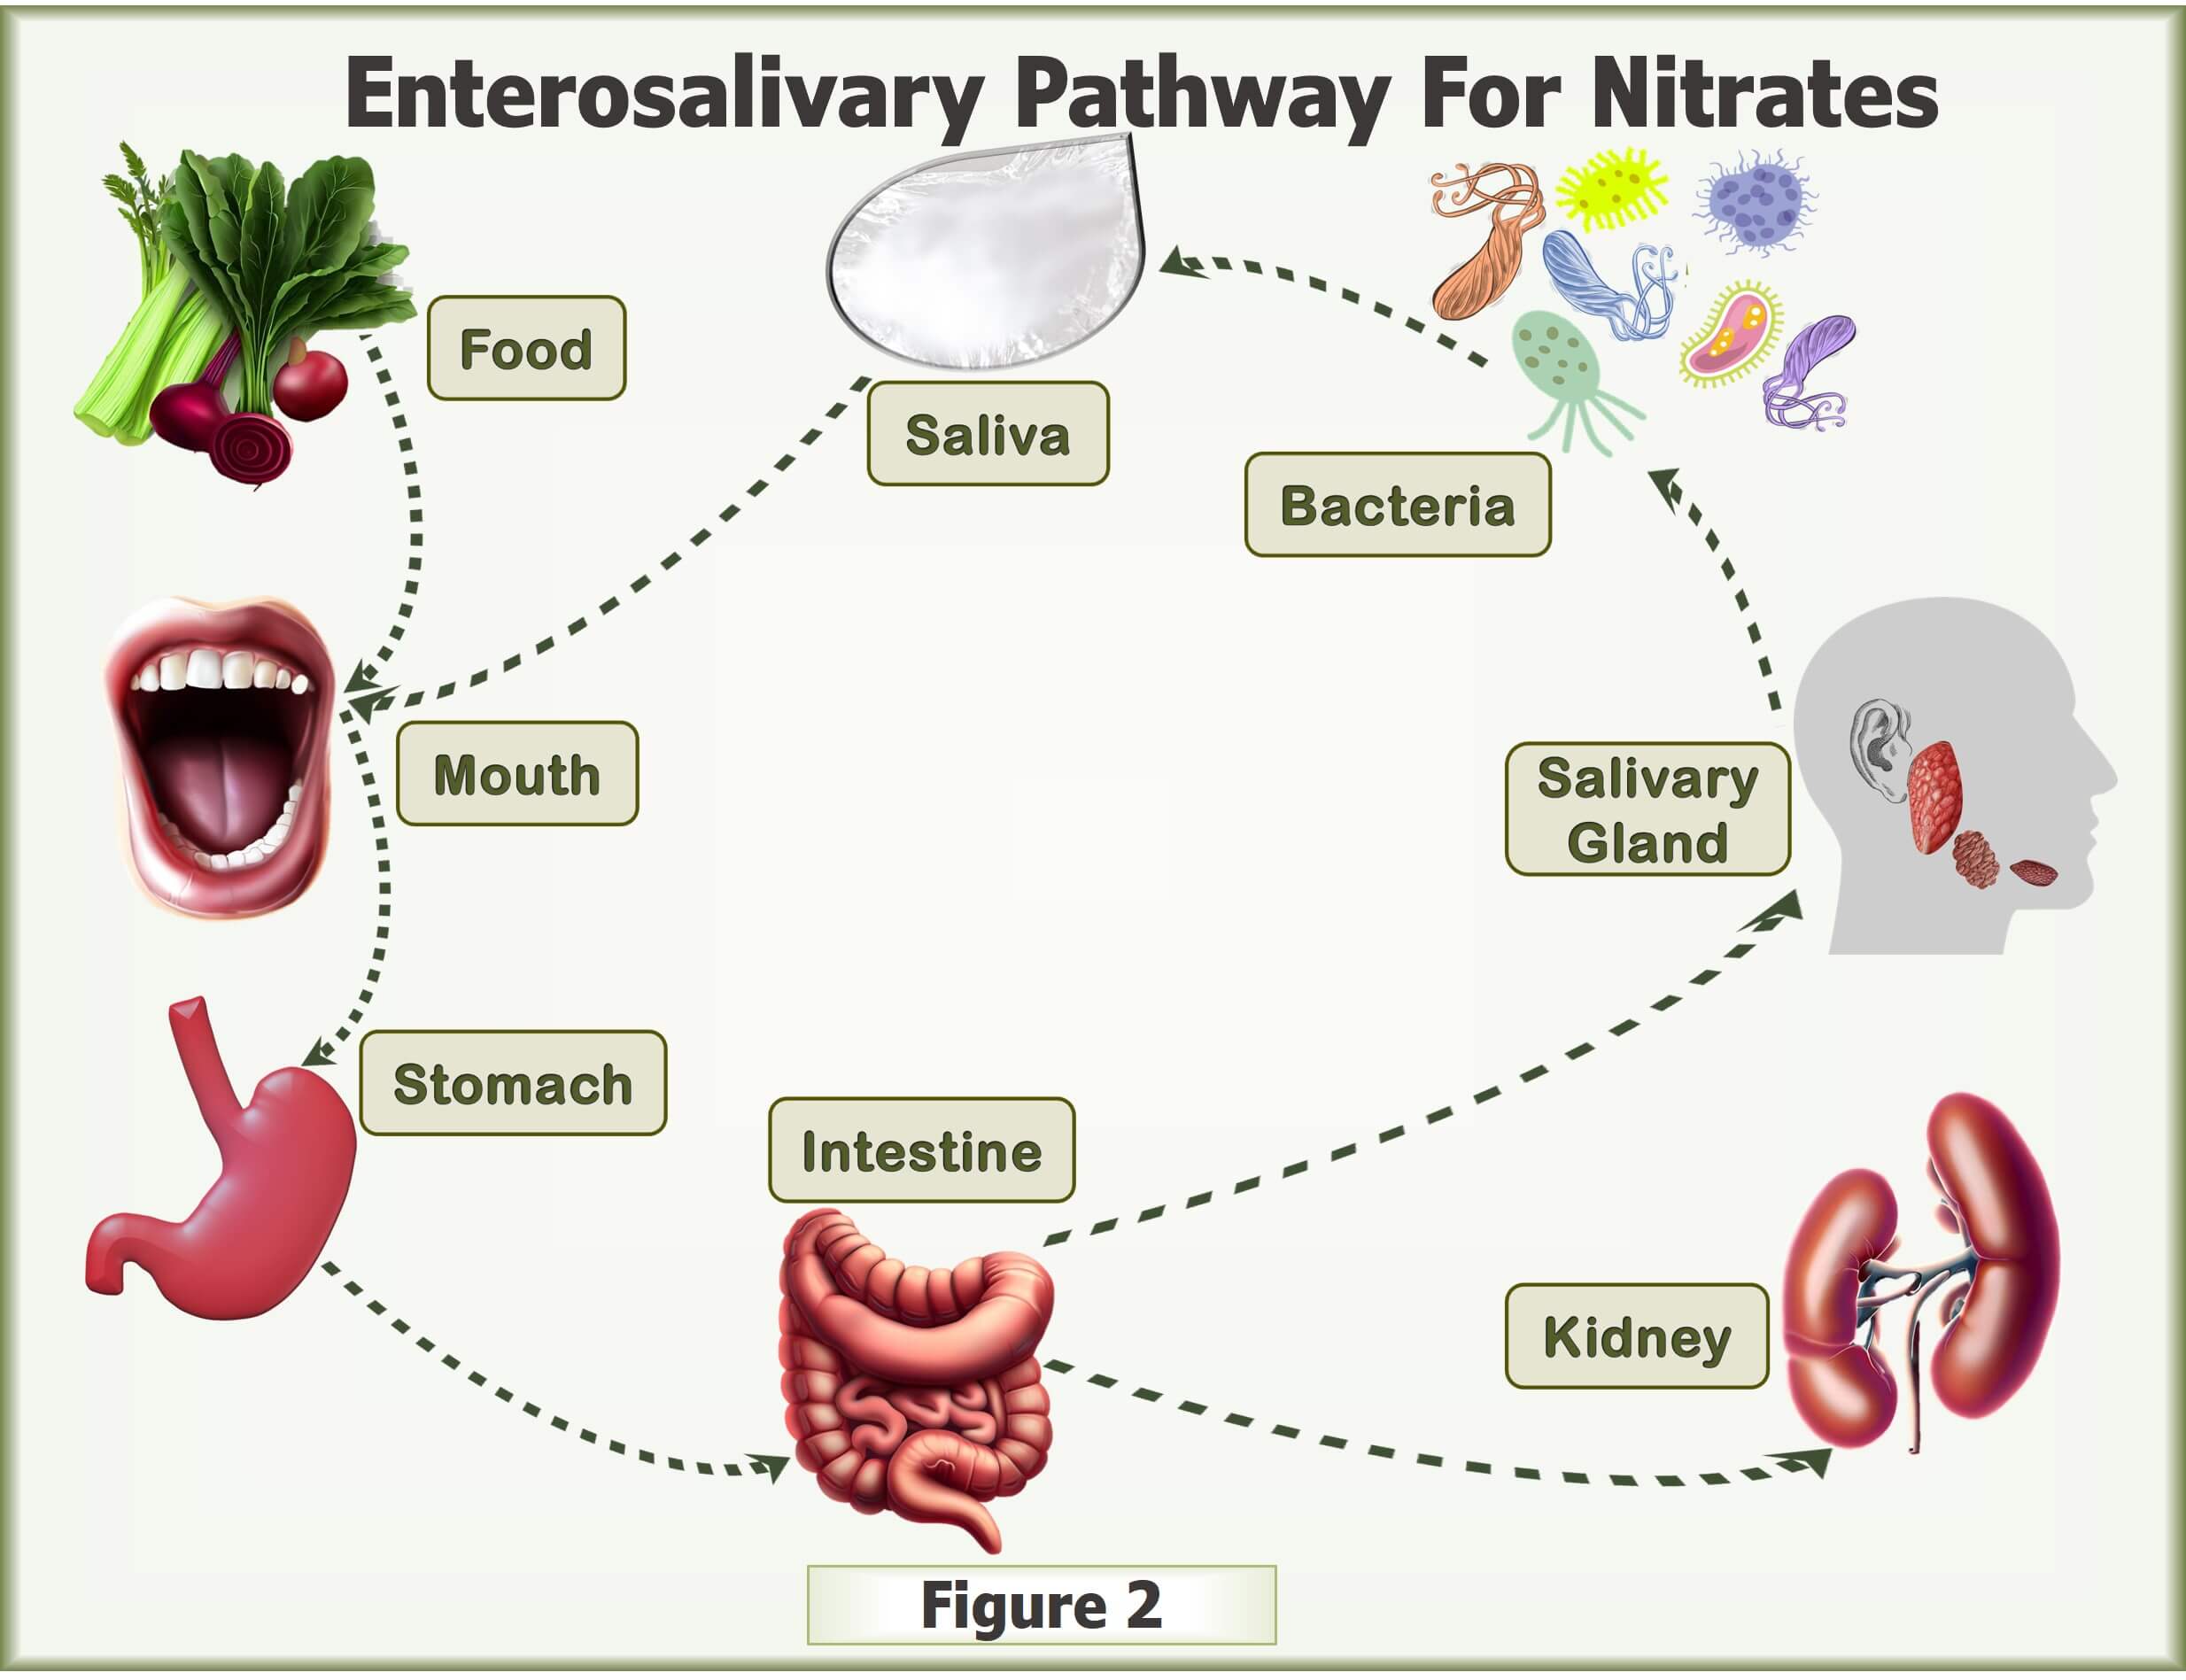 Enterosalivary Pathway For Nitrates text written